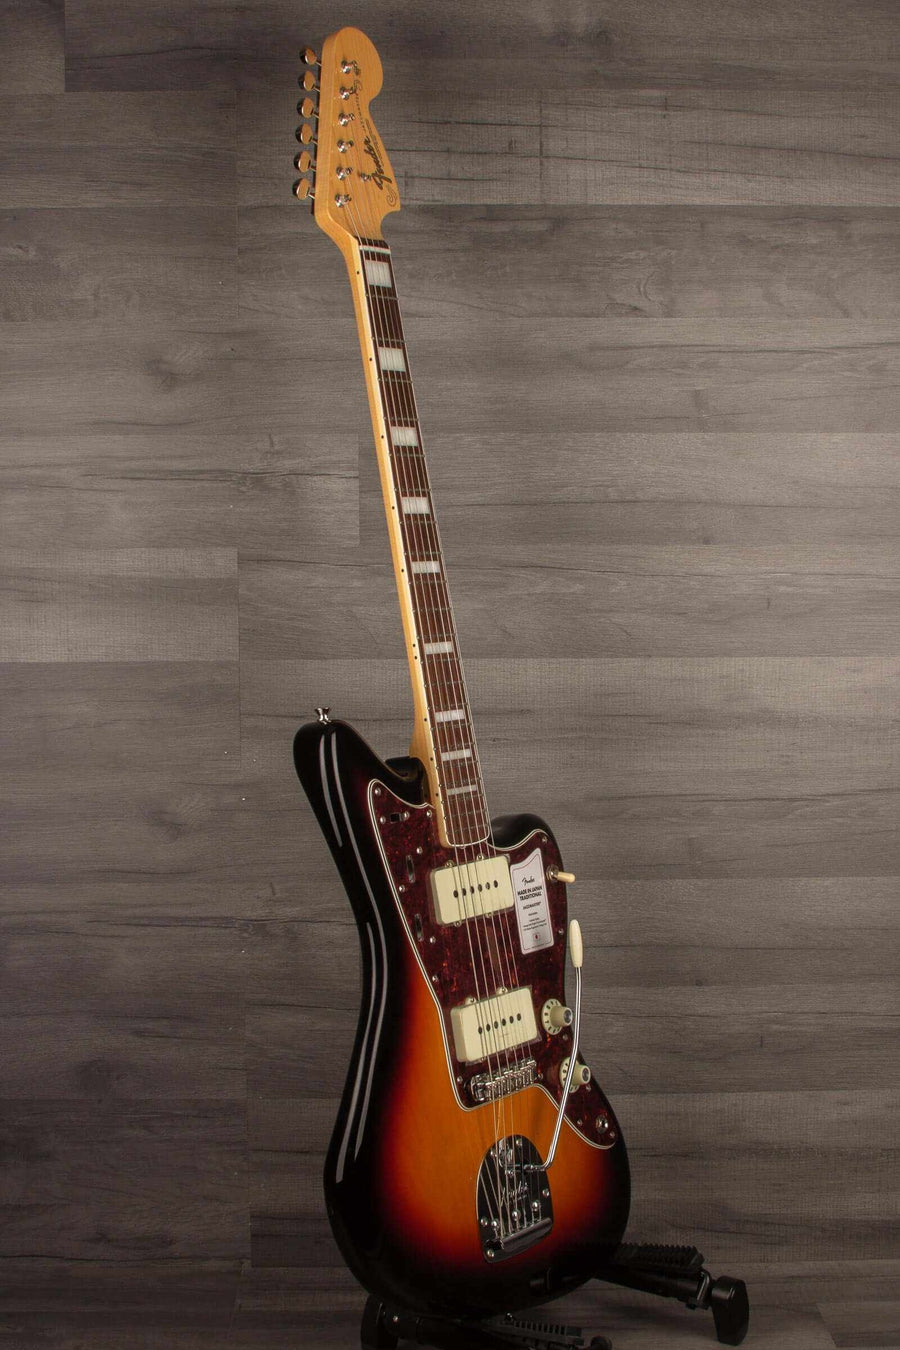 Fender - Traditional Late 60s Jazzmaster® 3 colour sunburst - Made in Japan